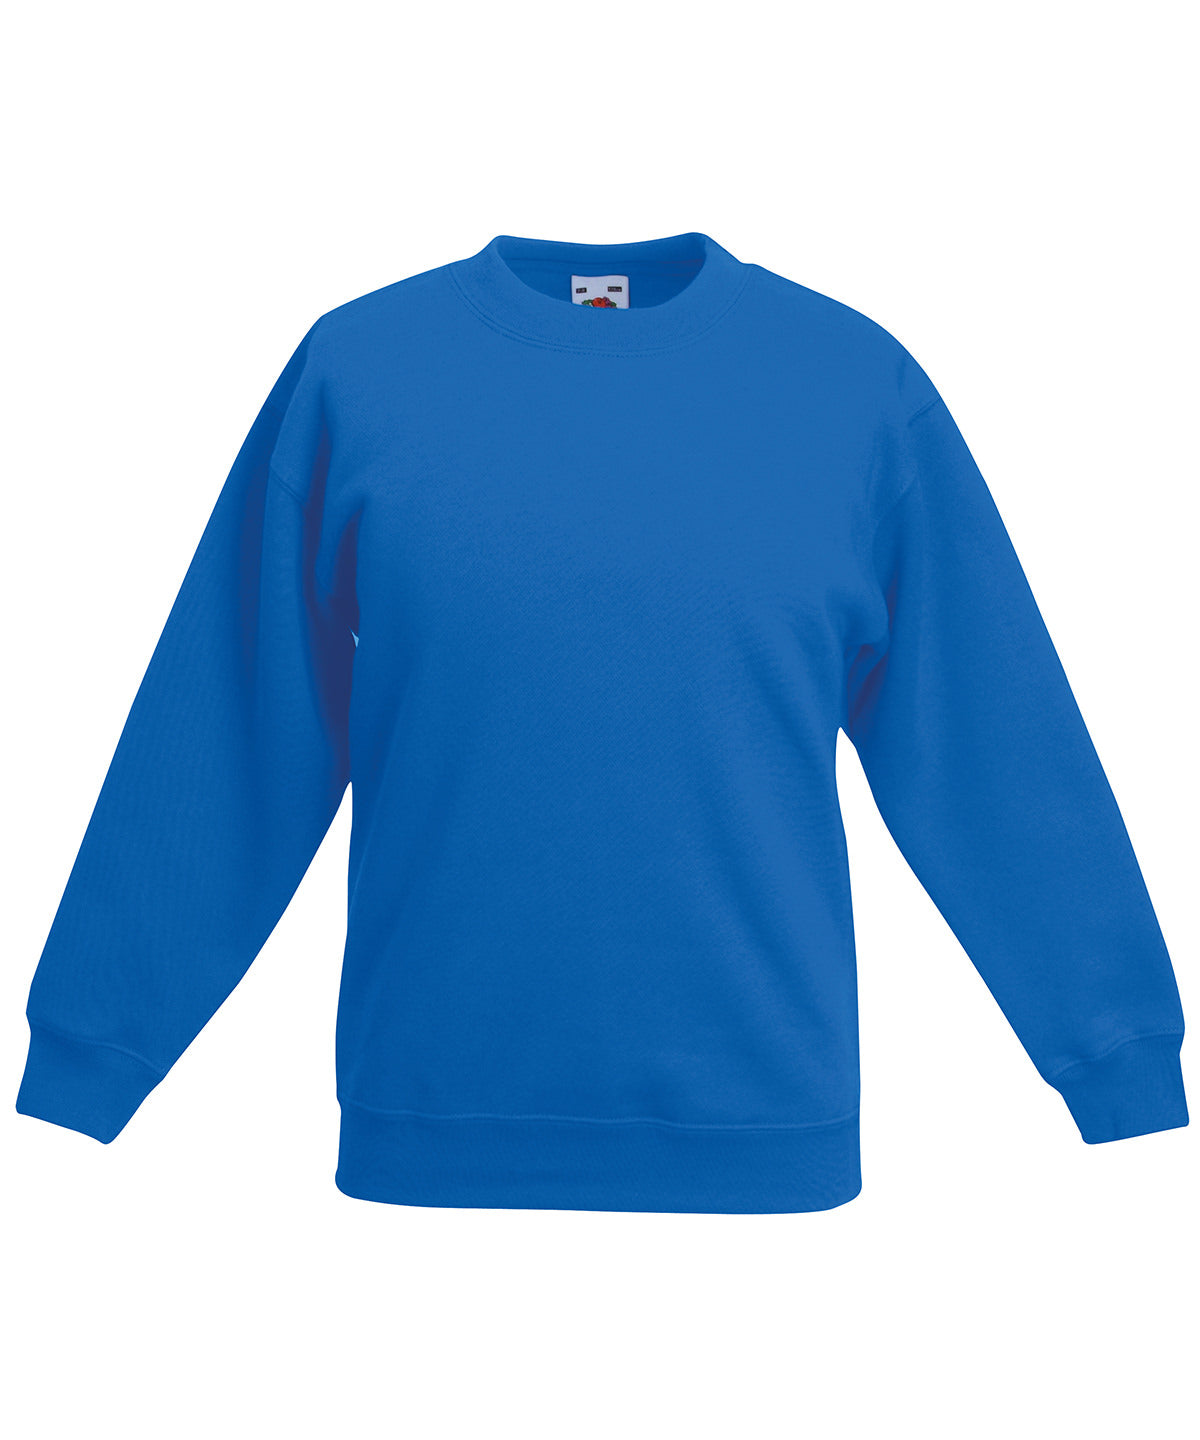 Personalised Sweatshirts - Bottle Fruit of the Loom Kids classic set-in sweatshirt